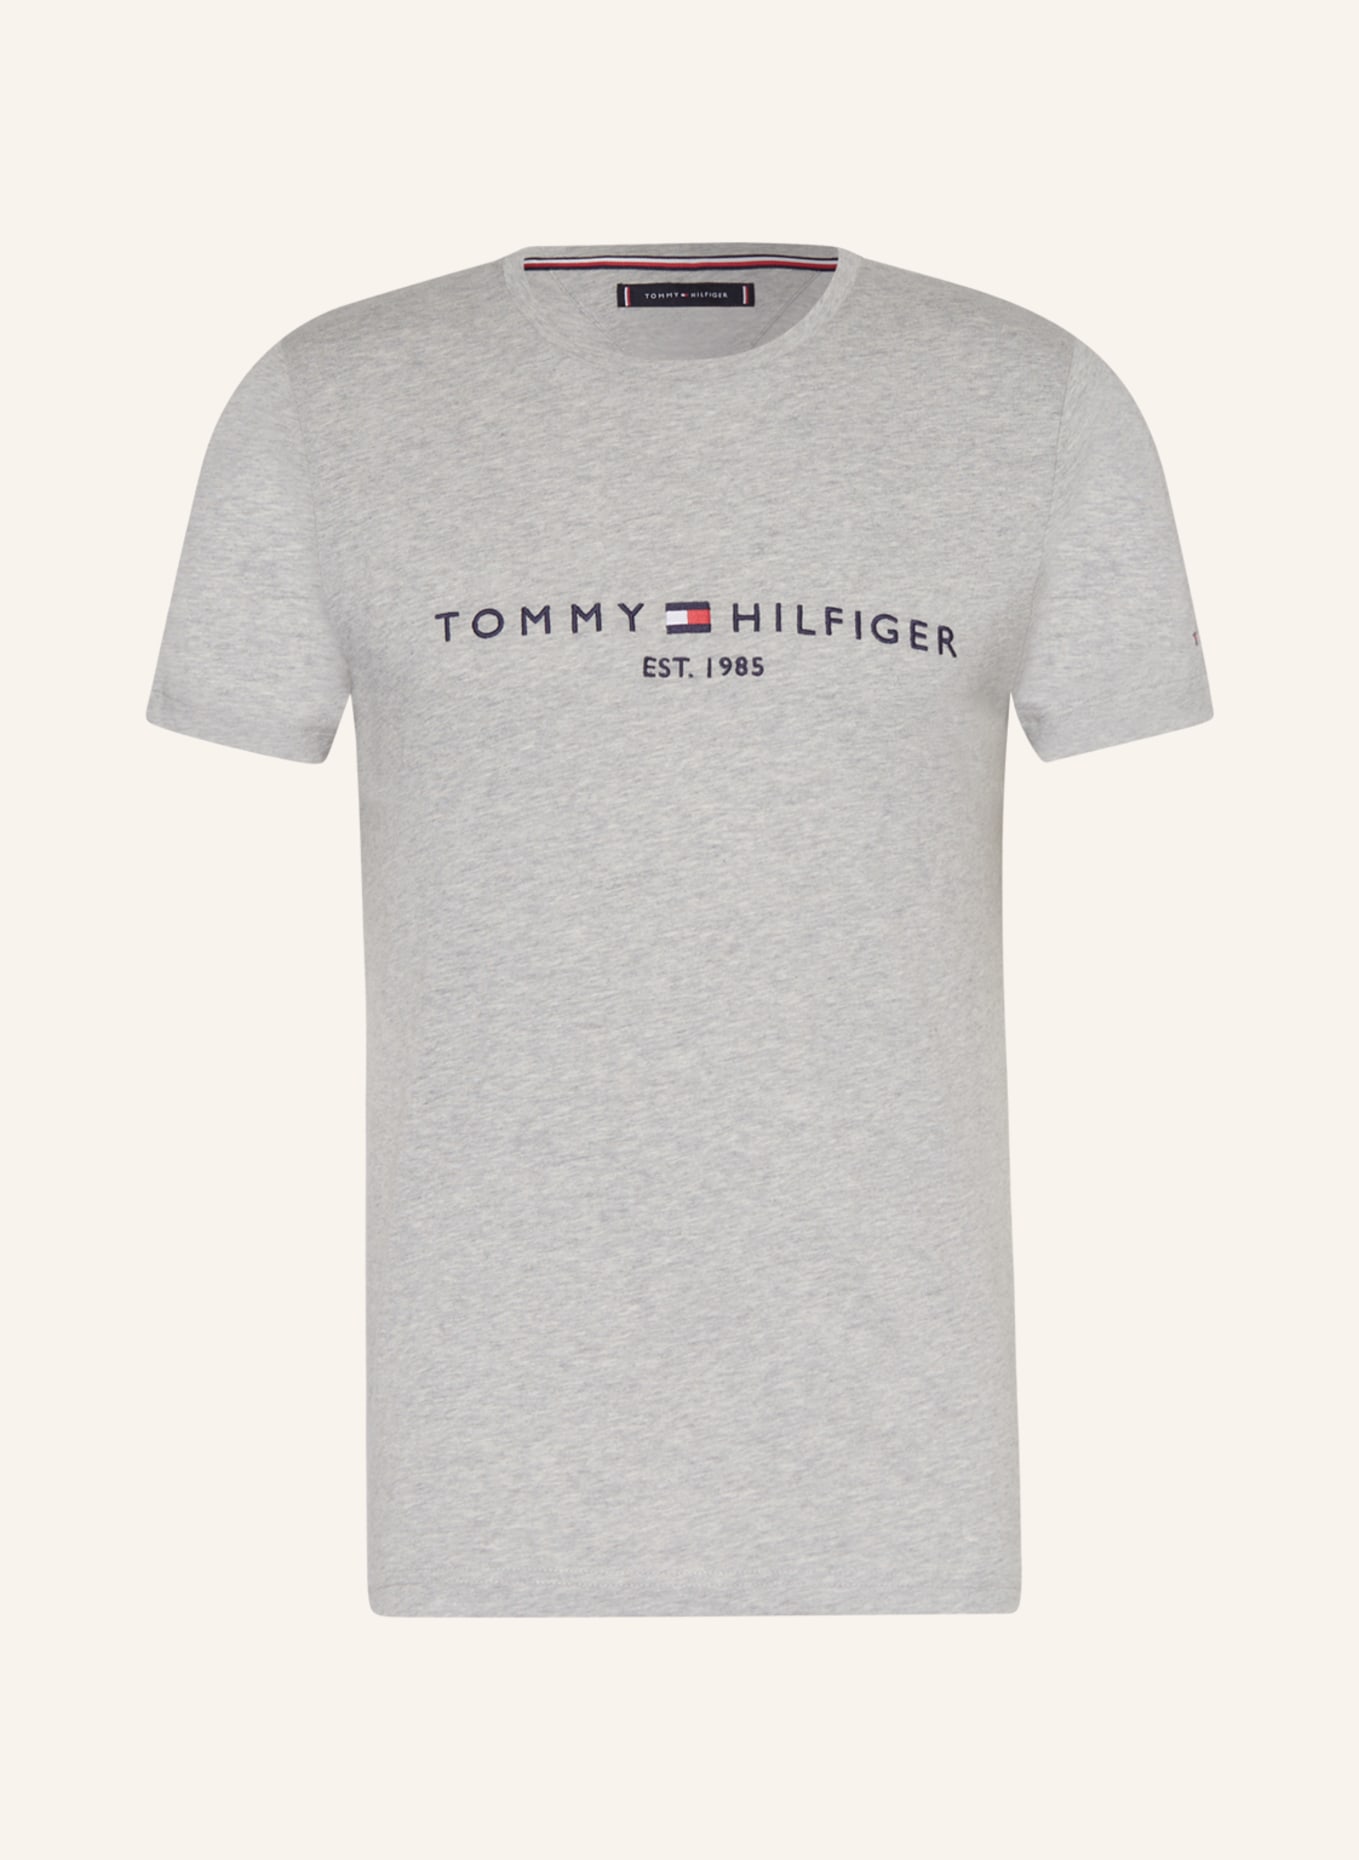 TOMMY HILFIGER T-Shirt, Farbe: HELLGRAU MELIERT (Bild 1)